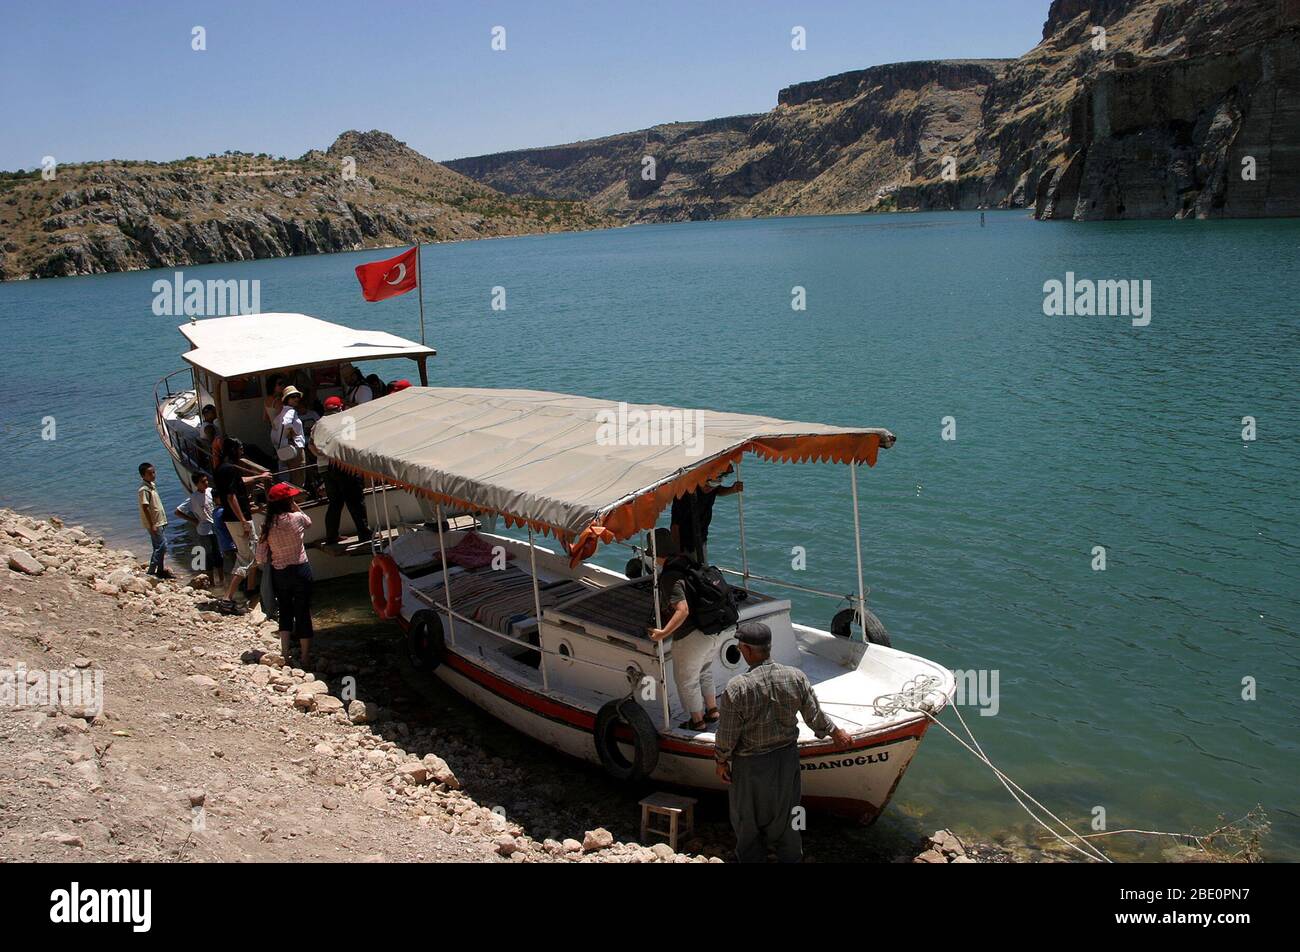 FIRAT RIVER, TURKEY - JANUARY 06: Tourists waiting river boat in Firat River Coastline (Euphrates River) on January 06, 2000 in Gaziantep, Turkey. Stock Photo